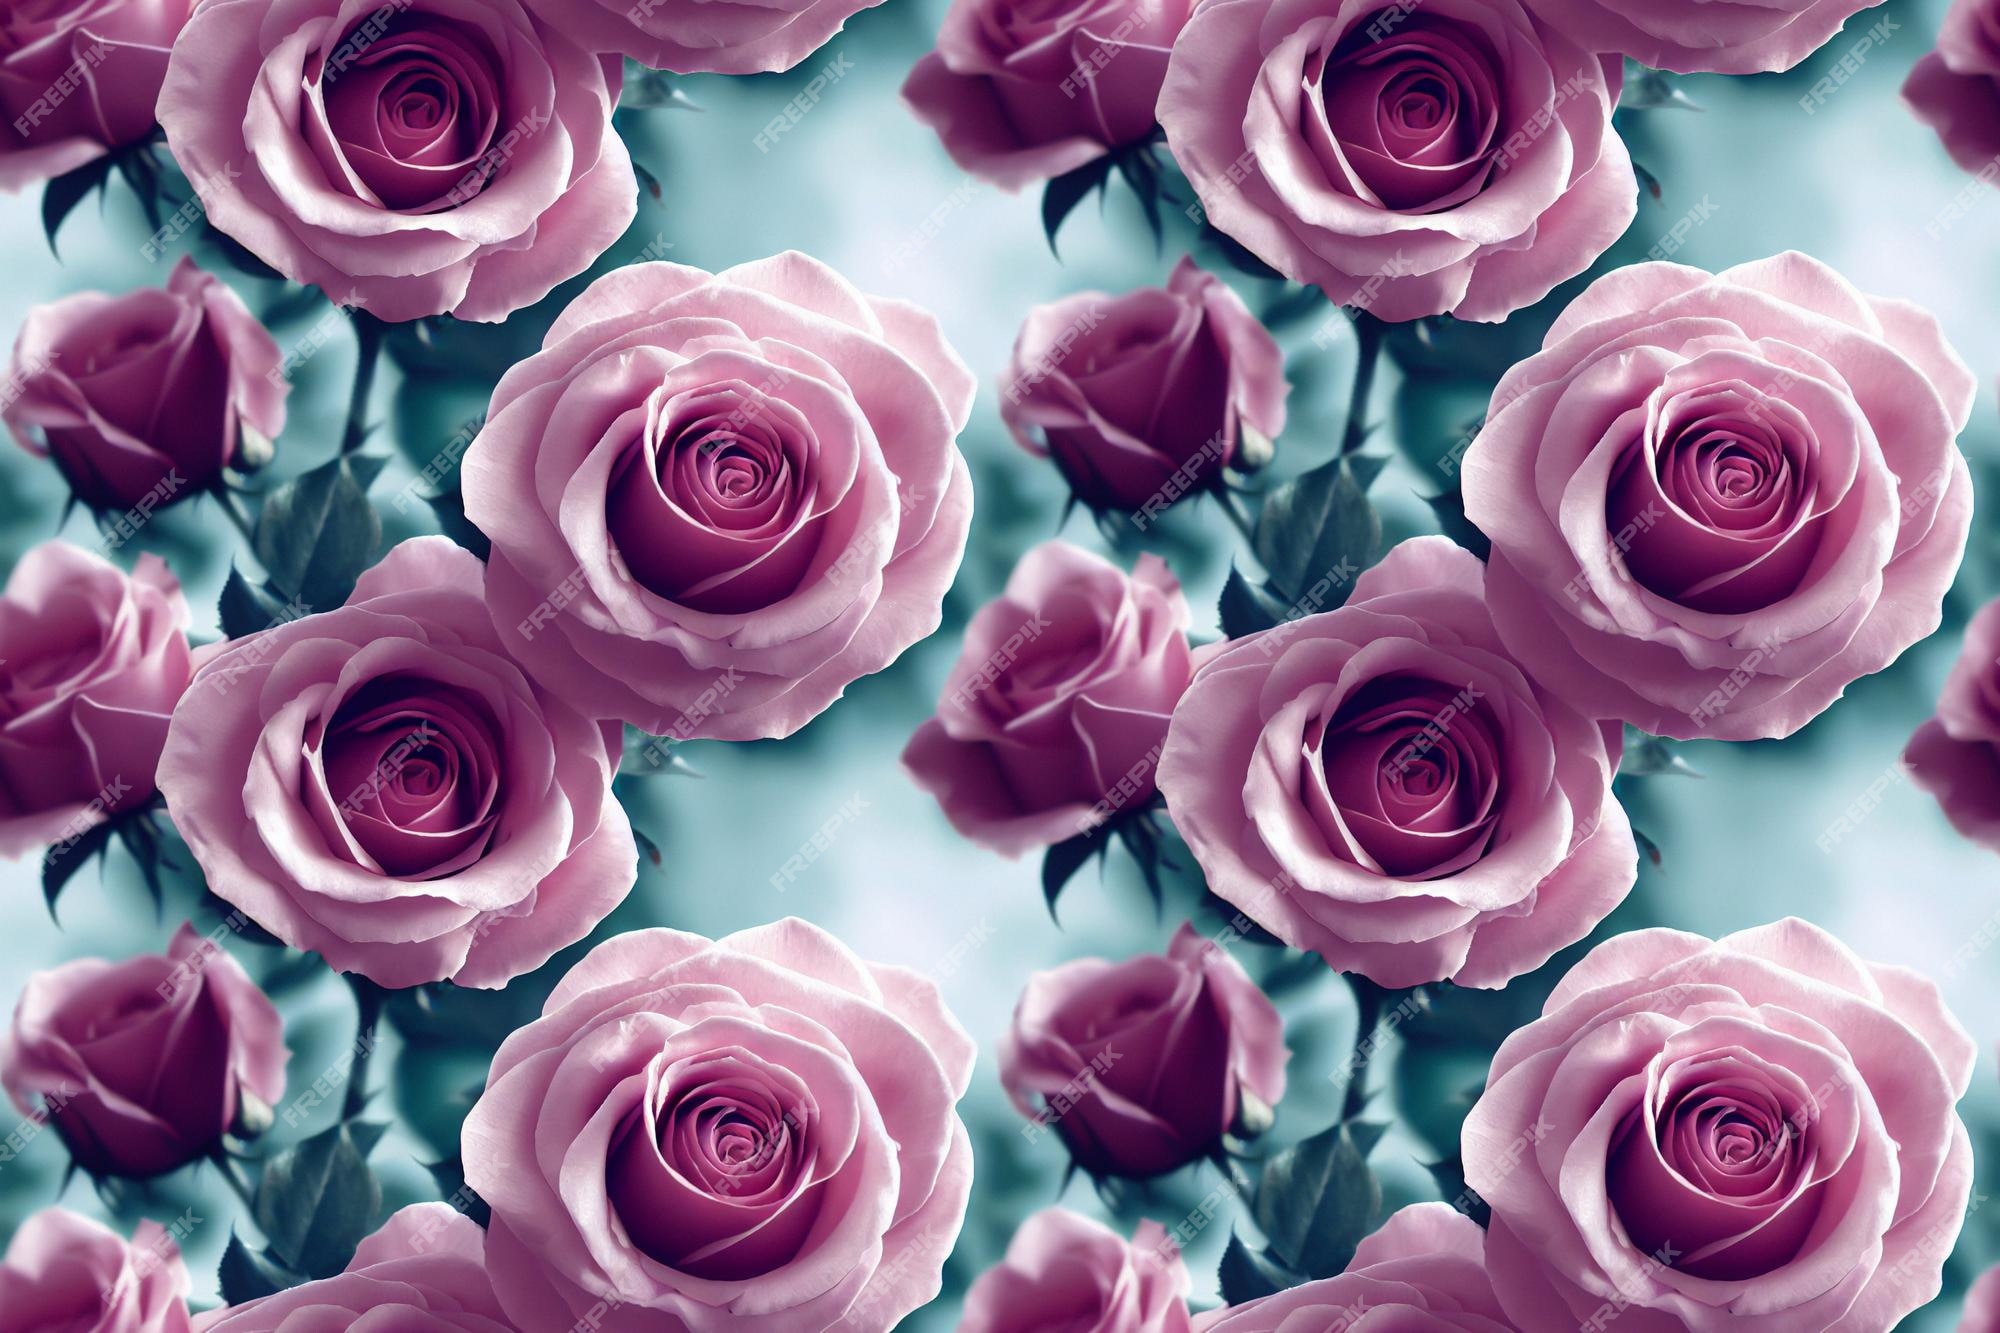 Premium Photo | Beautiful roses seamless background romantic flowers luxury  repeating backdrop 3d illustration